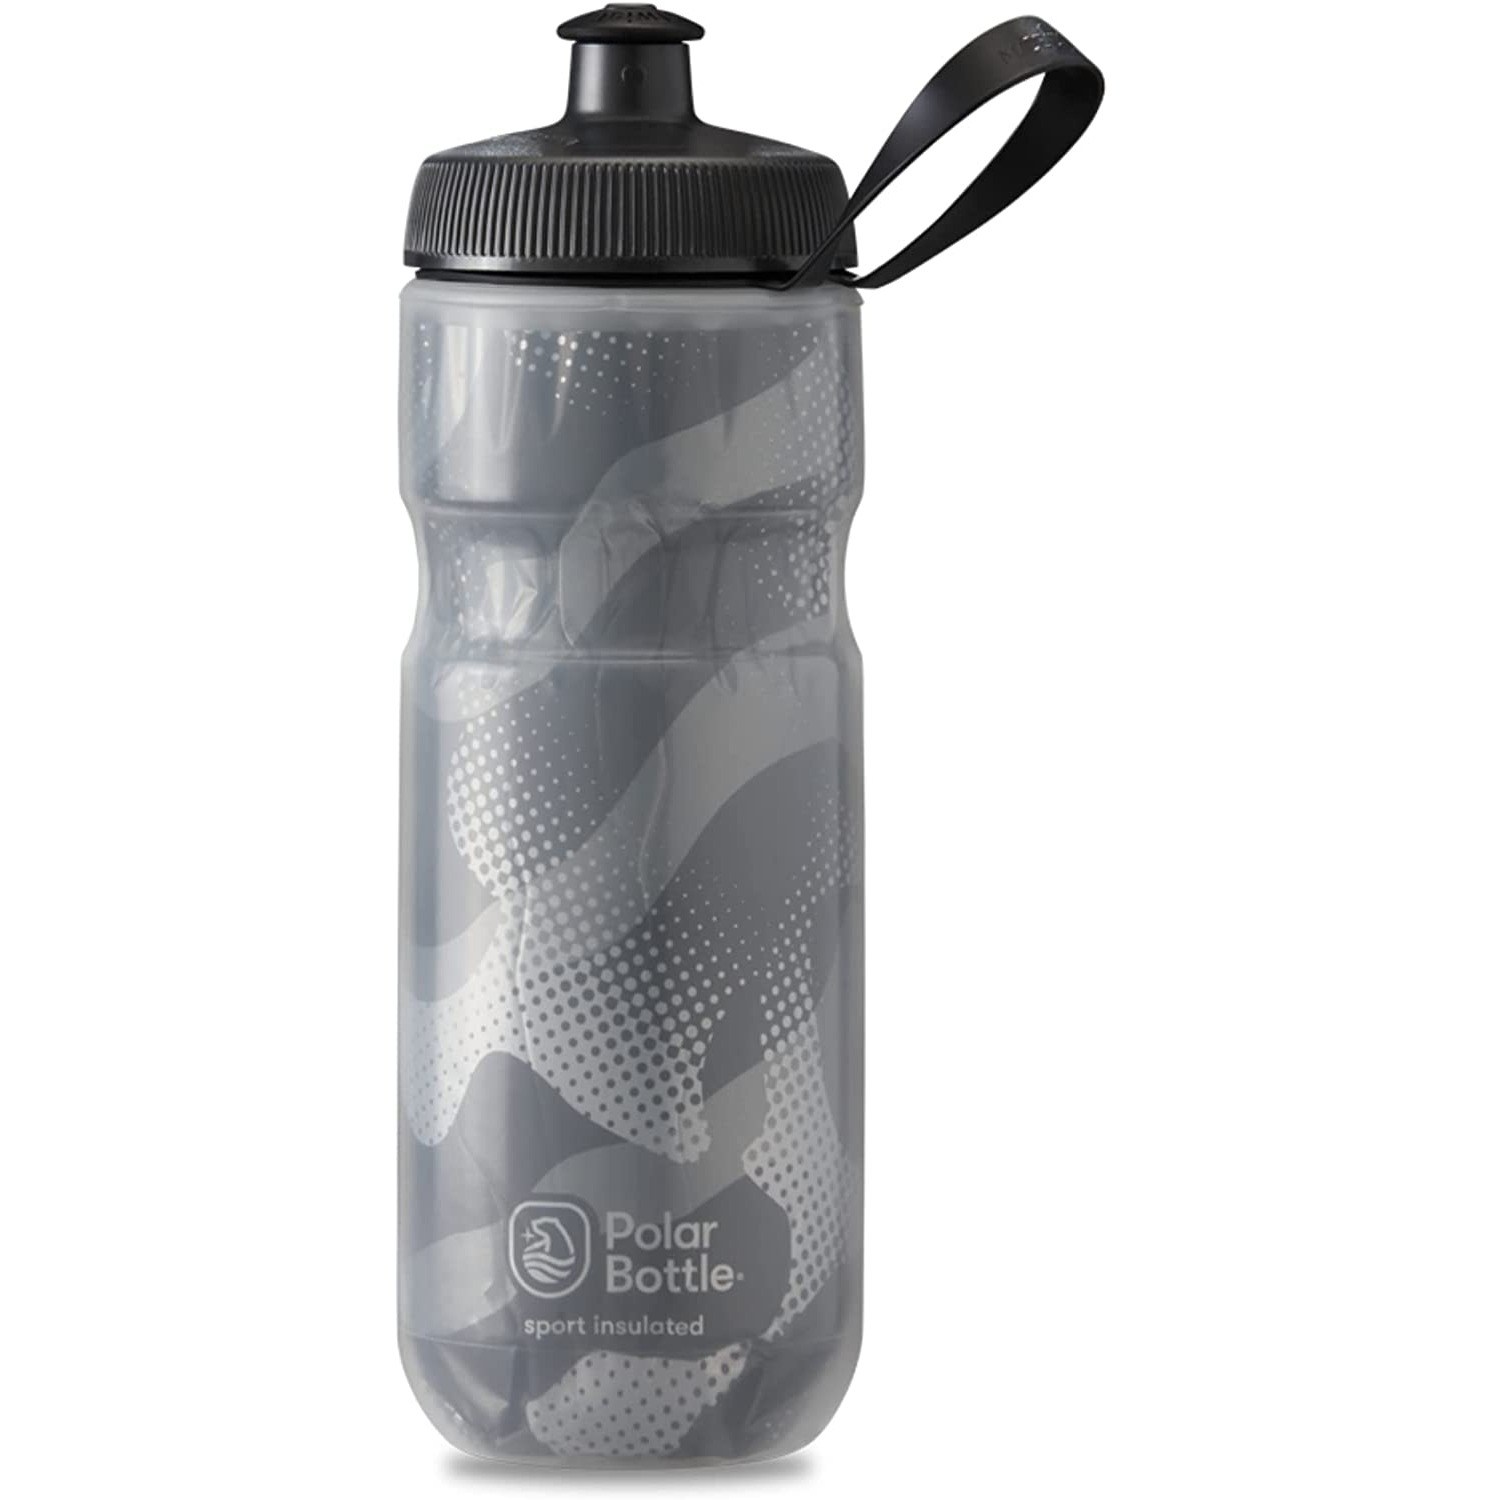 https://cdn.bestreviews.com/images/v4desktop/product-matrix/polar-bottle-sport-insulated-water-bottle.jpg